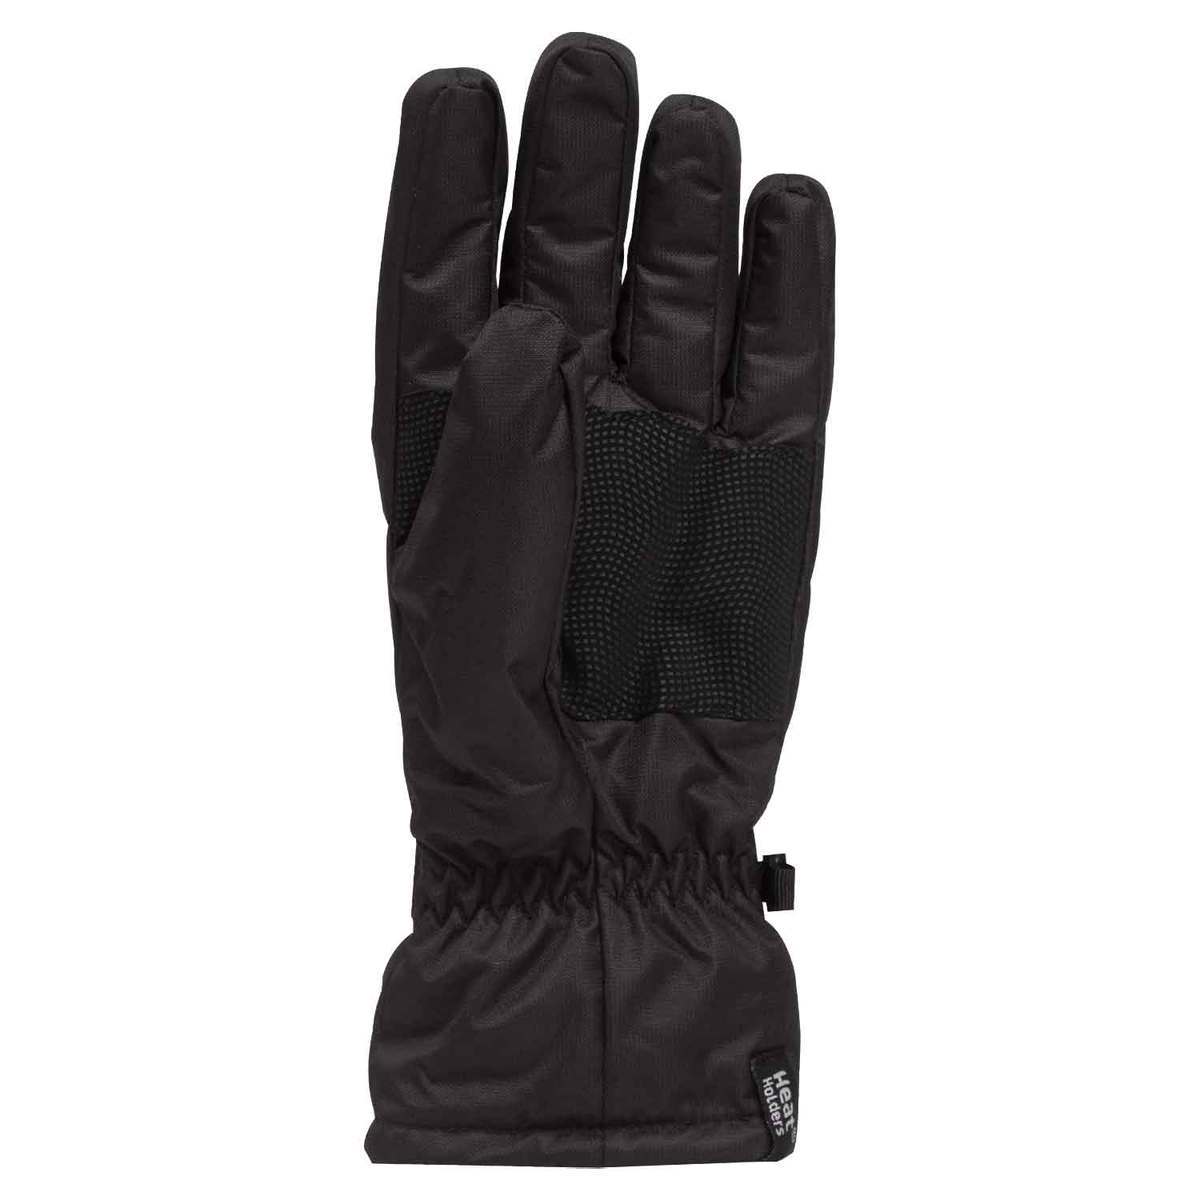 Heat Holders Women's High Performance Winter Gloves - Black - M/L ...